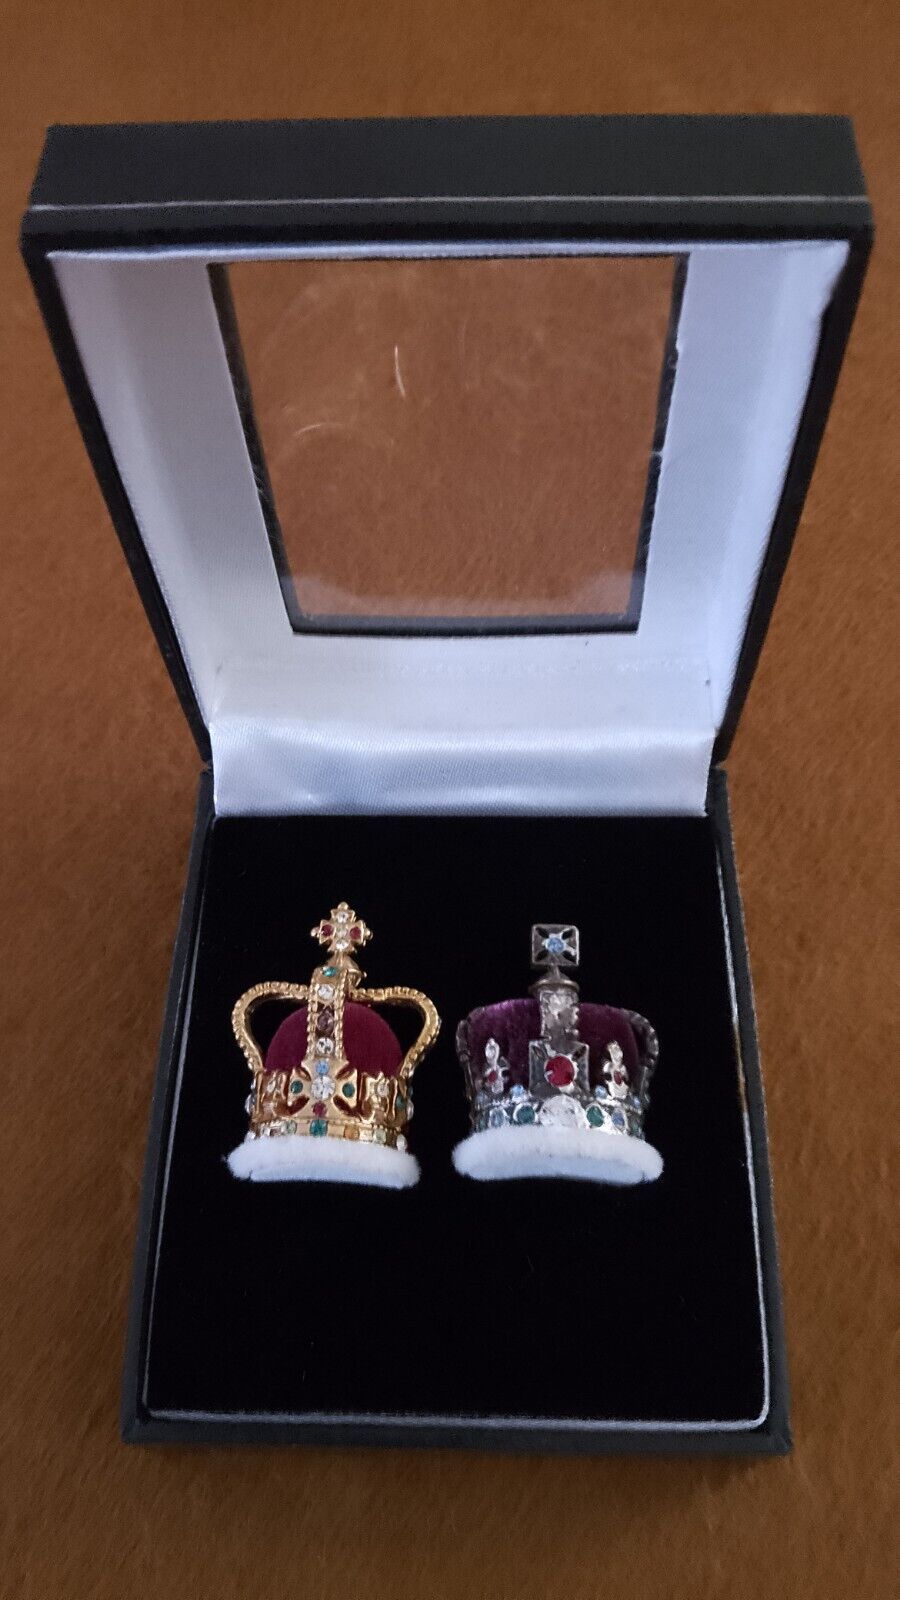 Vintage Miniature Royal Crown Jewels Of England Set Souvenir Display Box.